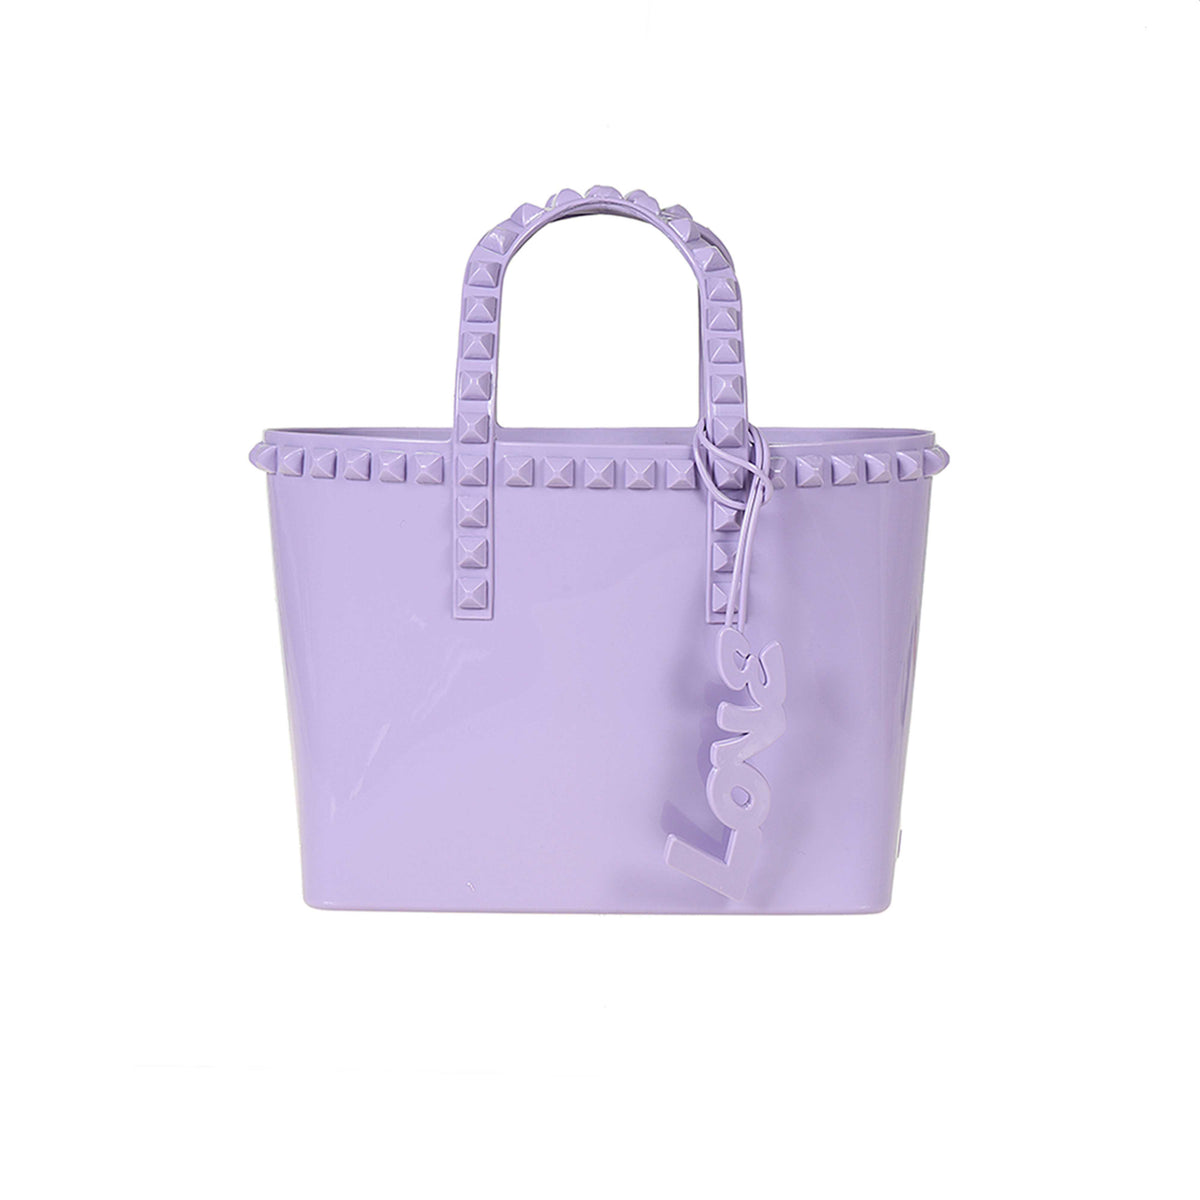 Violet jelly micro mini beach purse from Carmen Sol